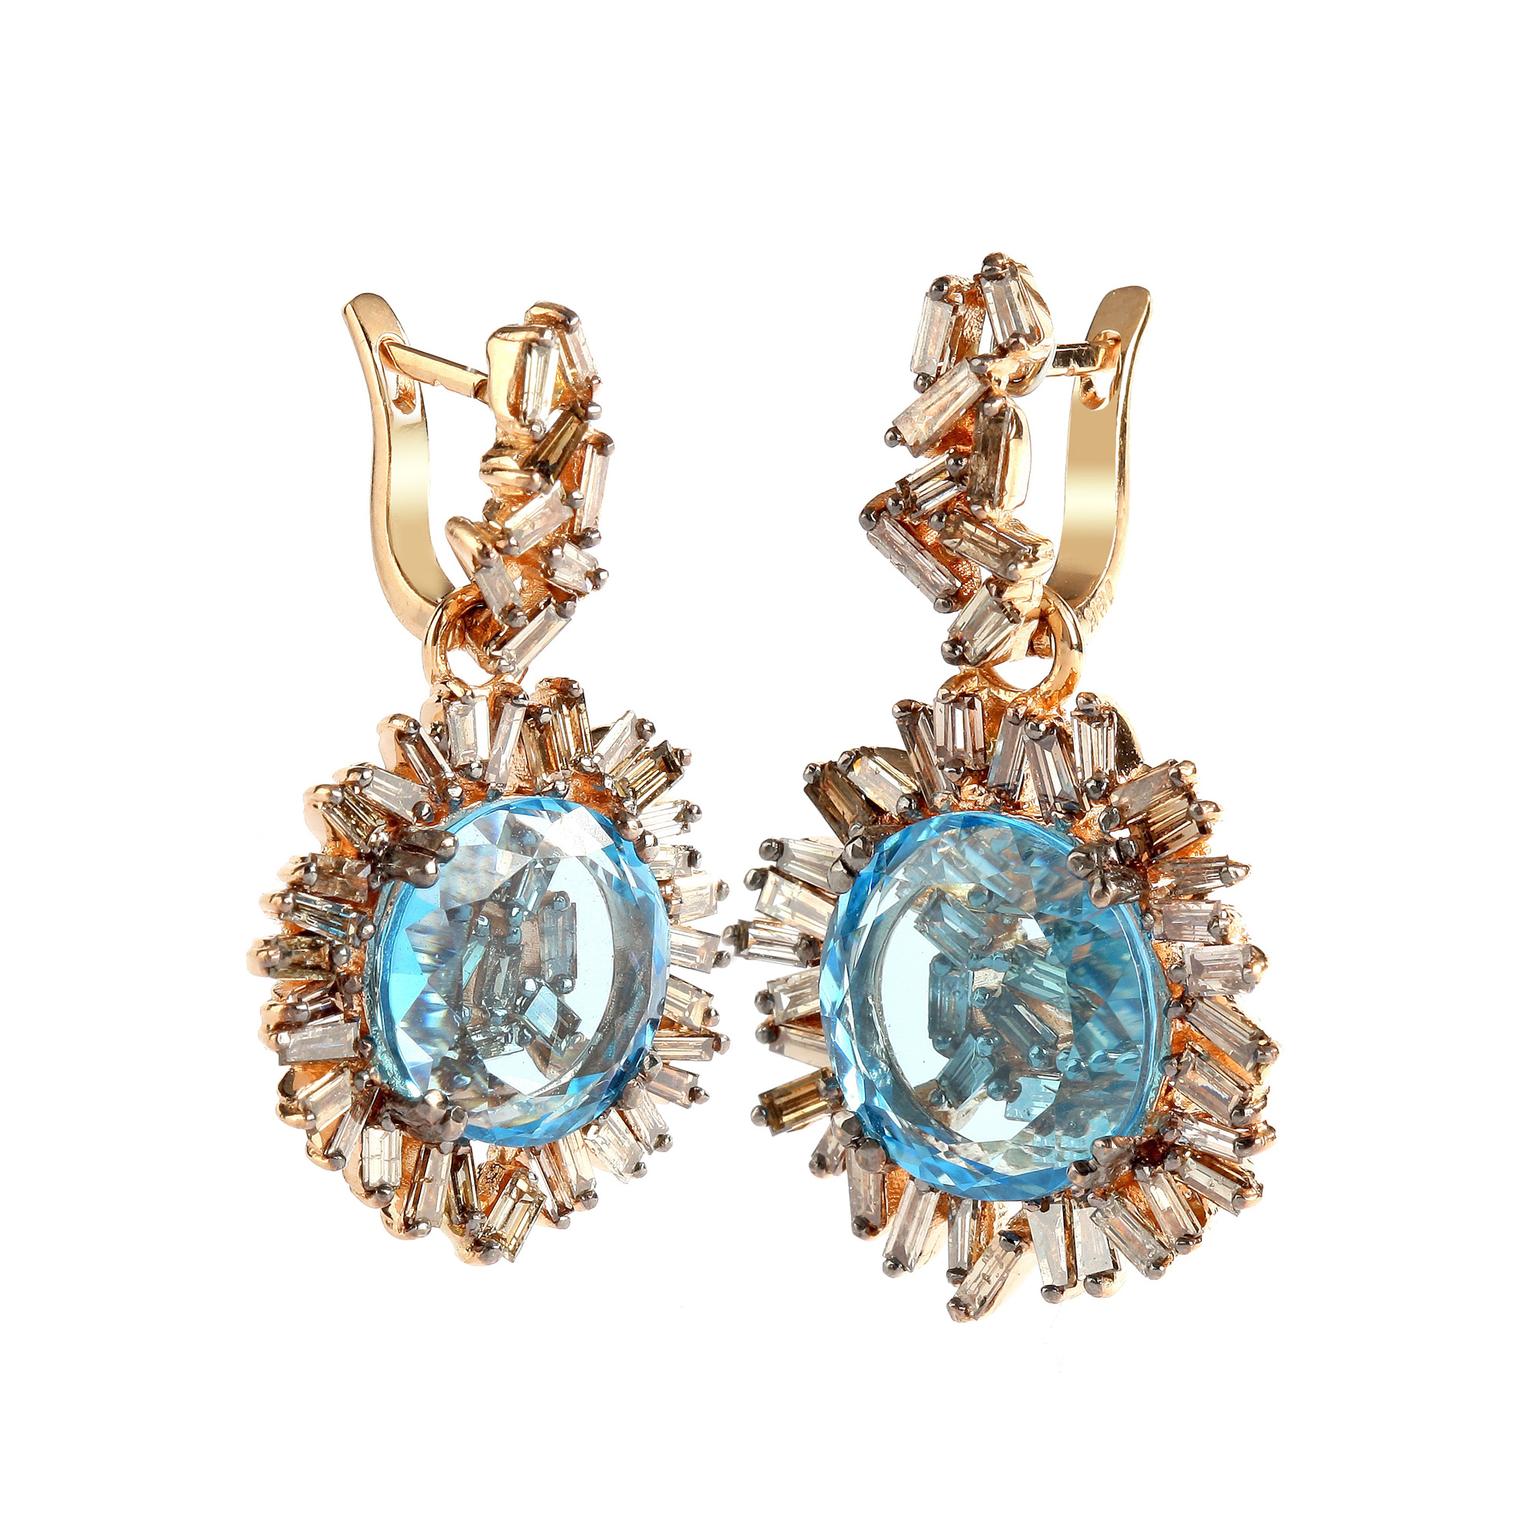 Suzanne Kalan blue topaz and diamond earrings